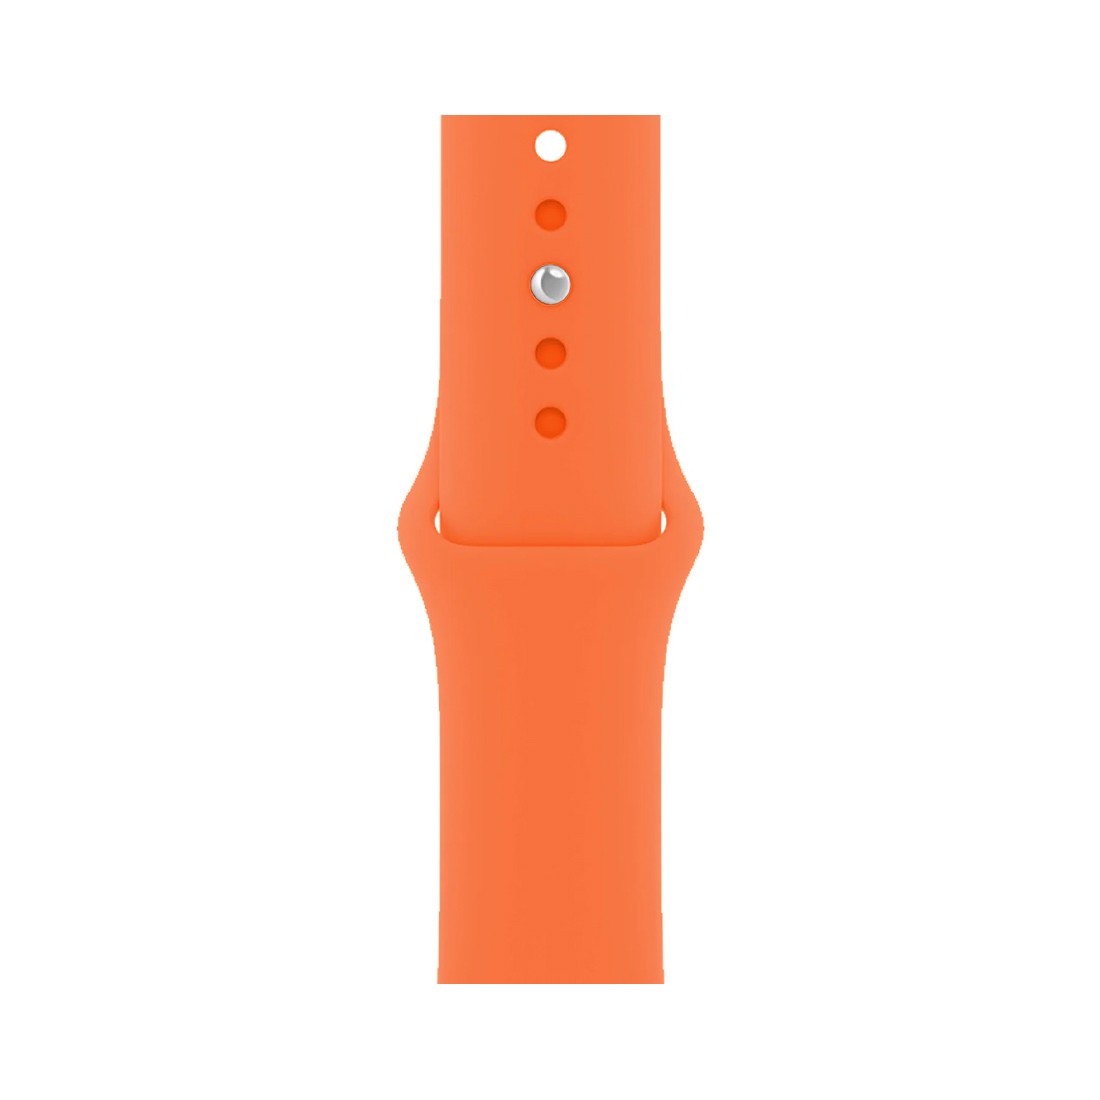 Apple Watch Uyumlu Spor Silikon Kordon Orange